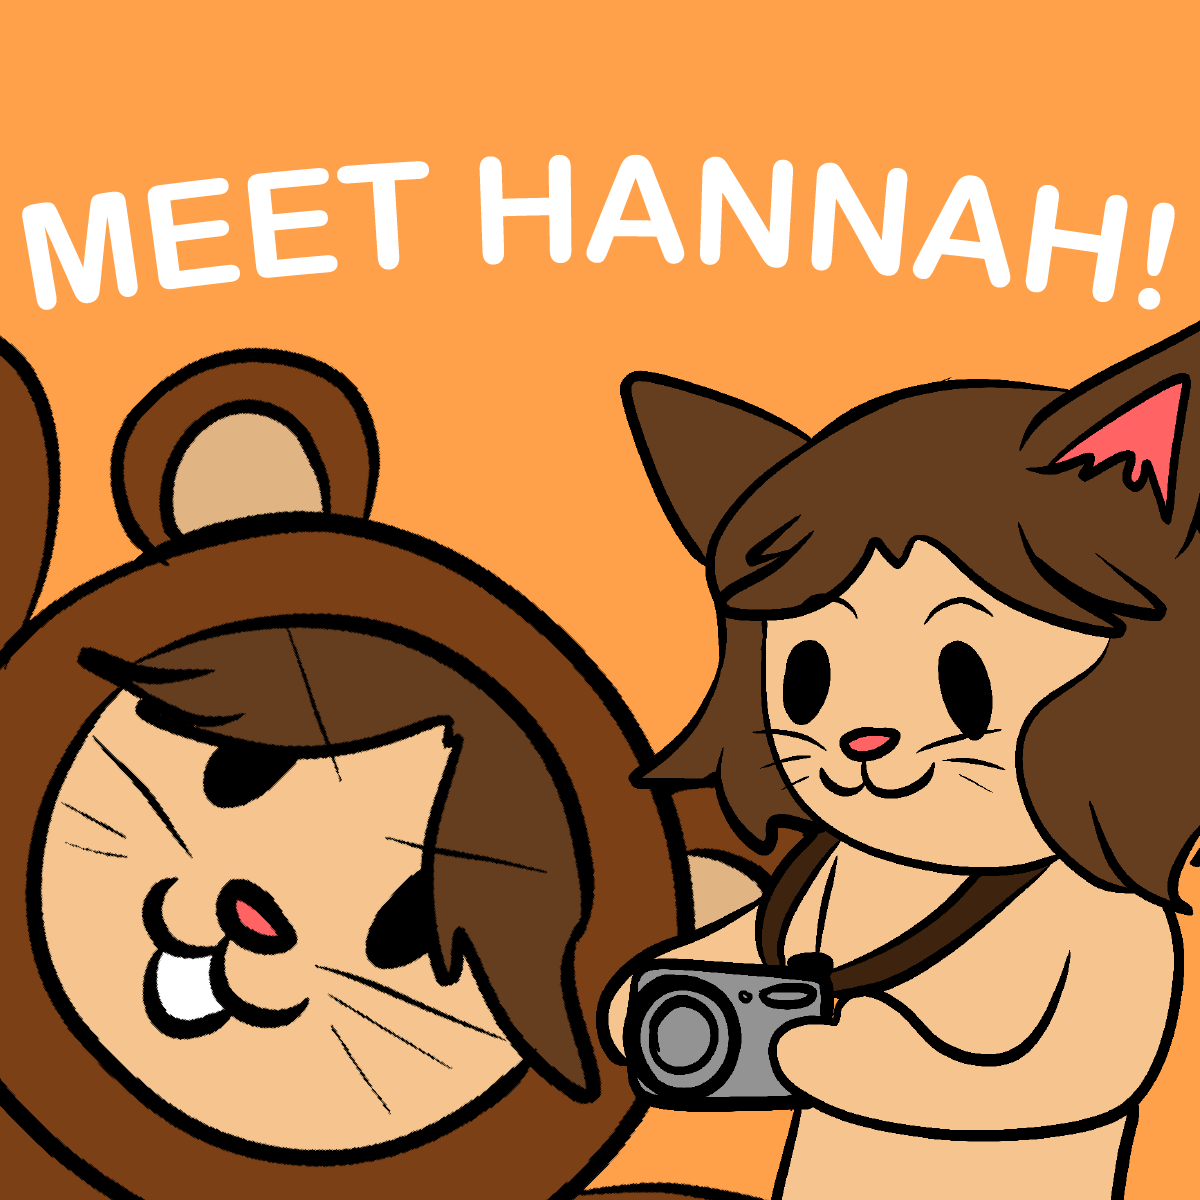 Introducing Hannah